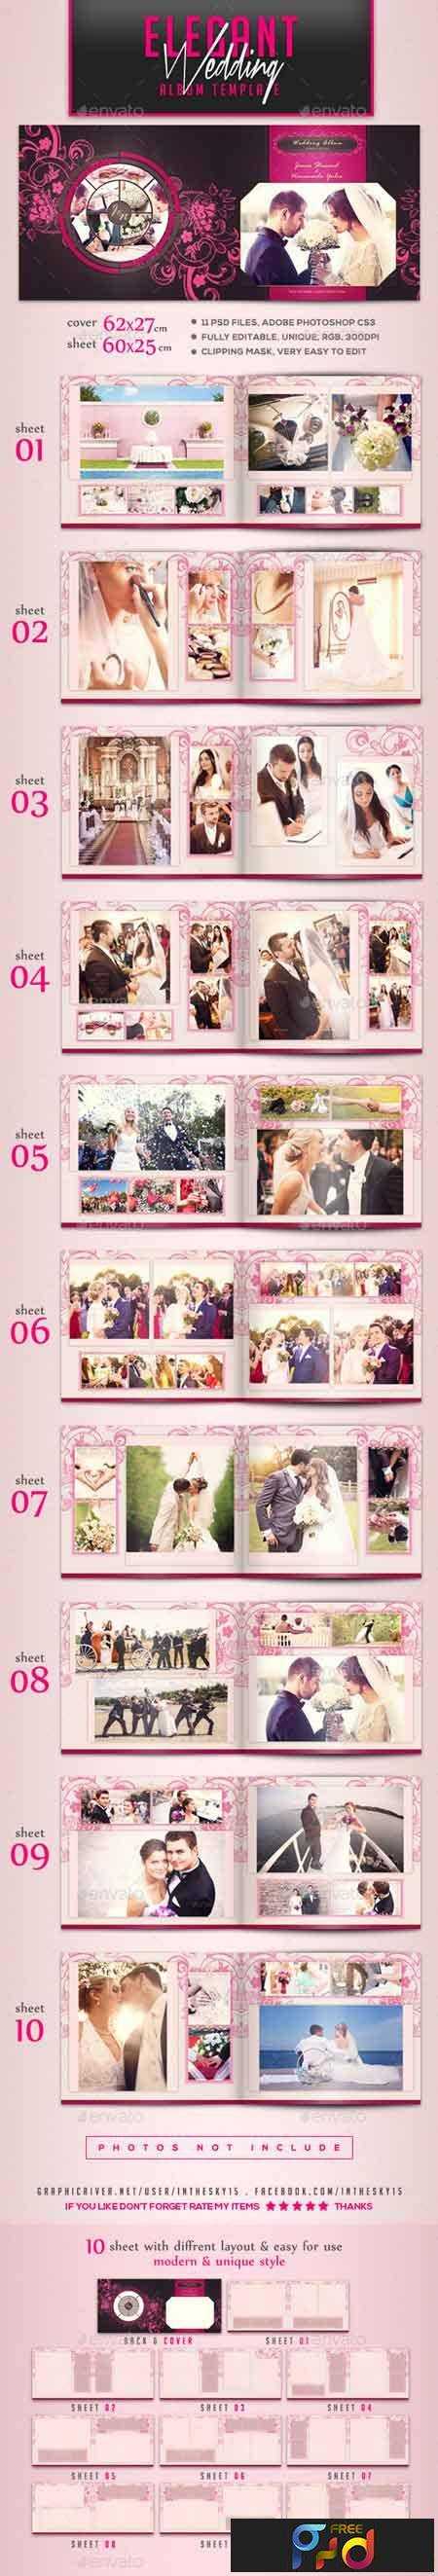 freepsdvn-com_1467948568_elegant-wedding-album-template-16105470